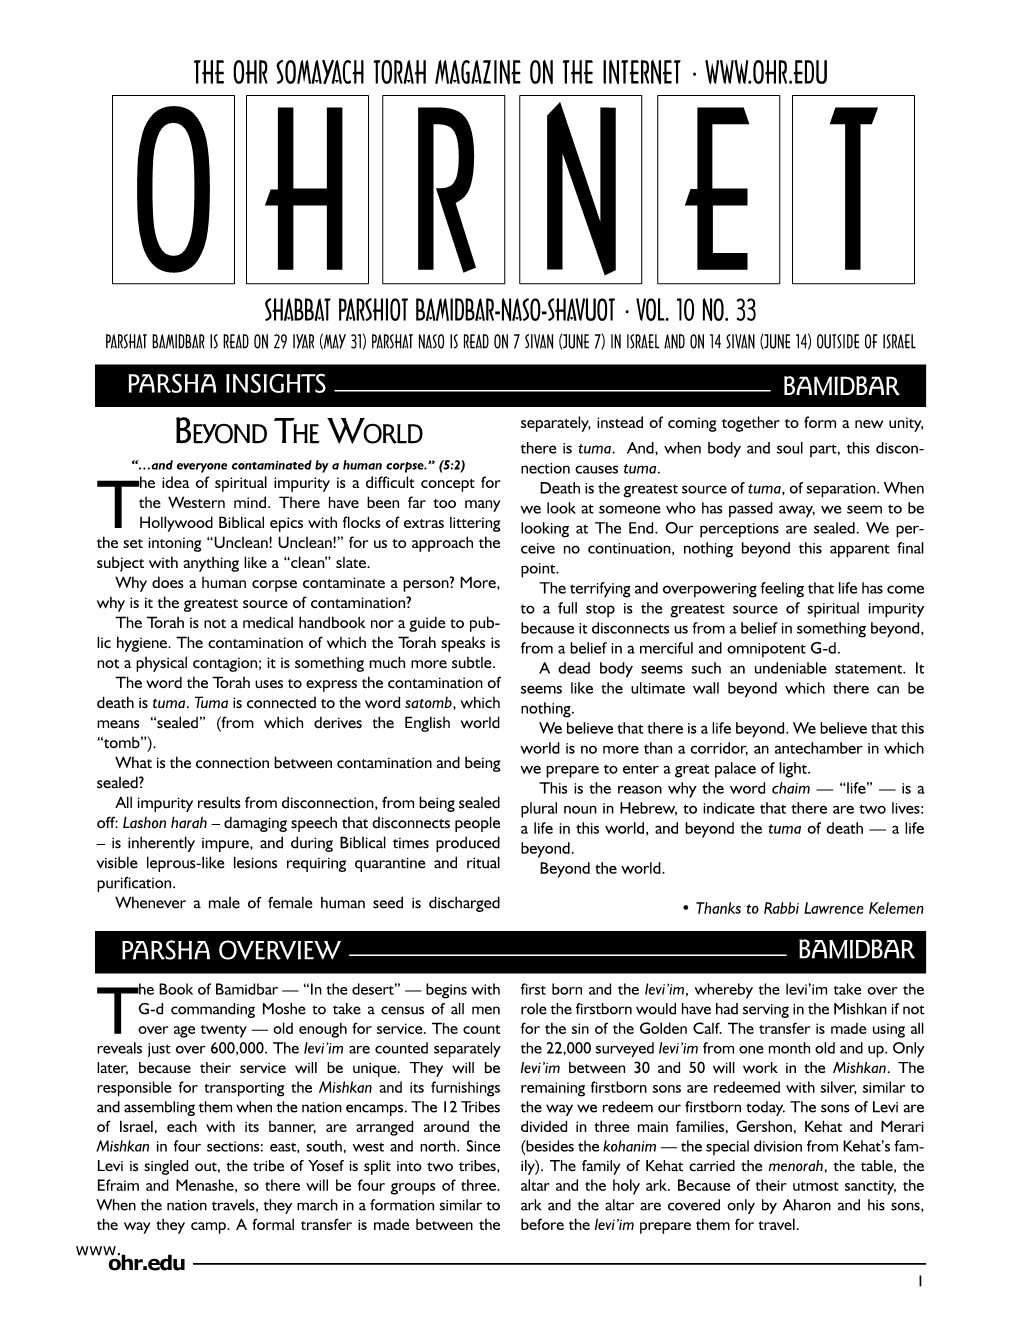 The Ohr Somayach Torah Magazine on the Internet • O H R N E T Shabbat Parshiot Bamidbar-Naso-Shavuot • Vol